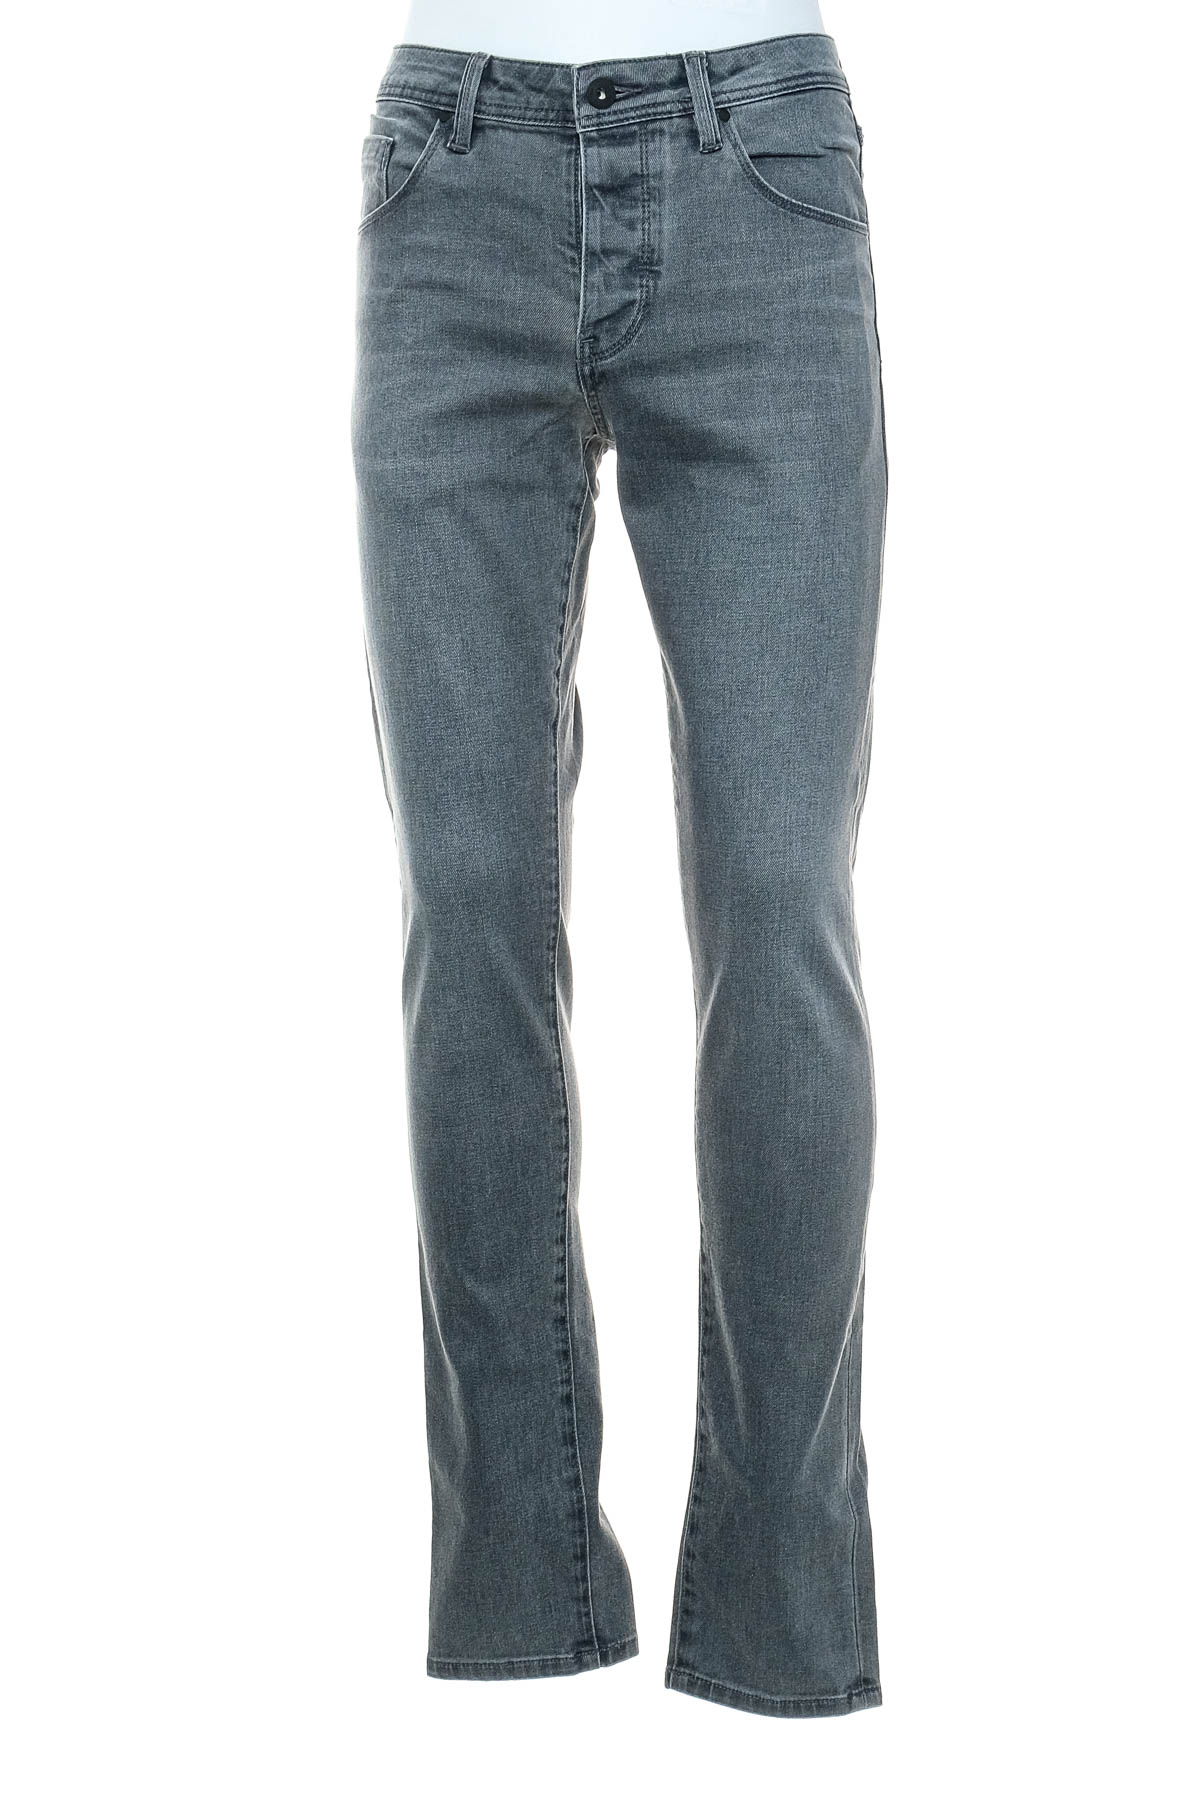 Men's jeans - INDUSTRIE - 0